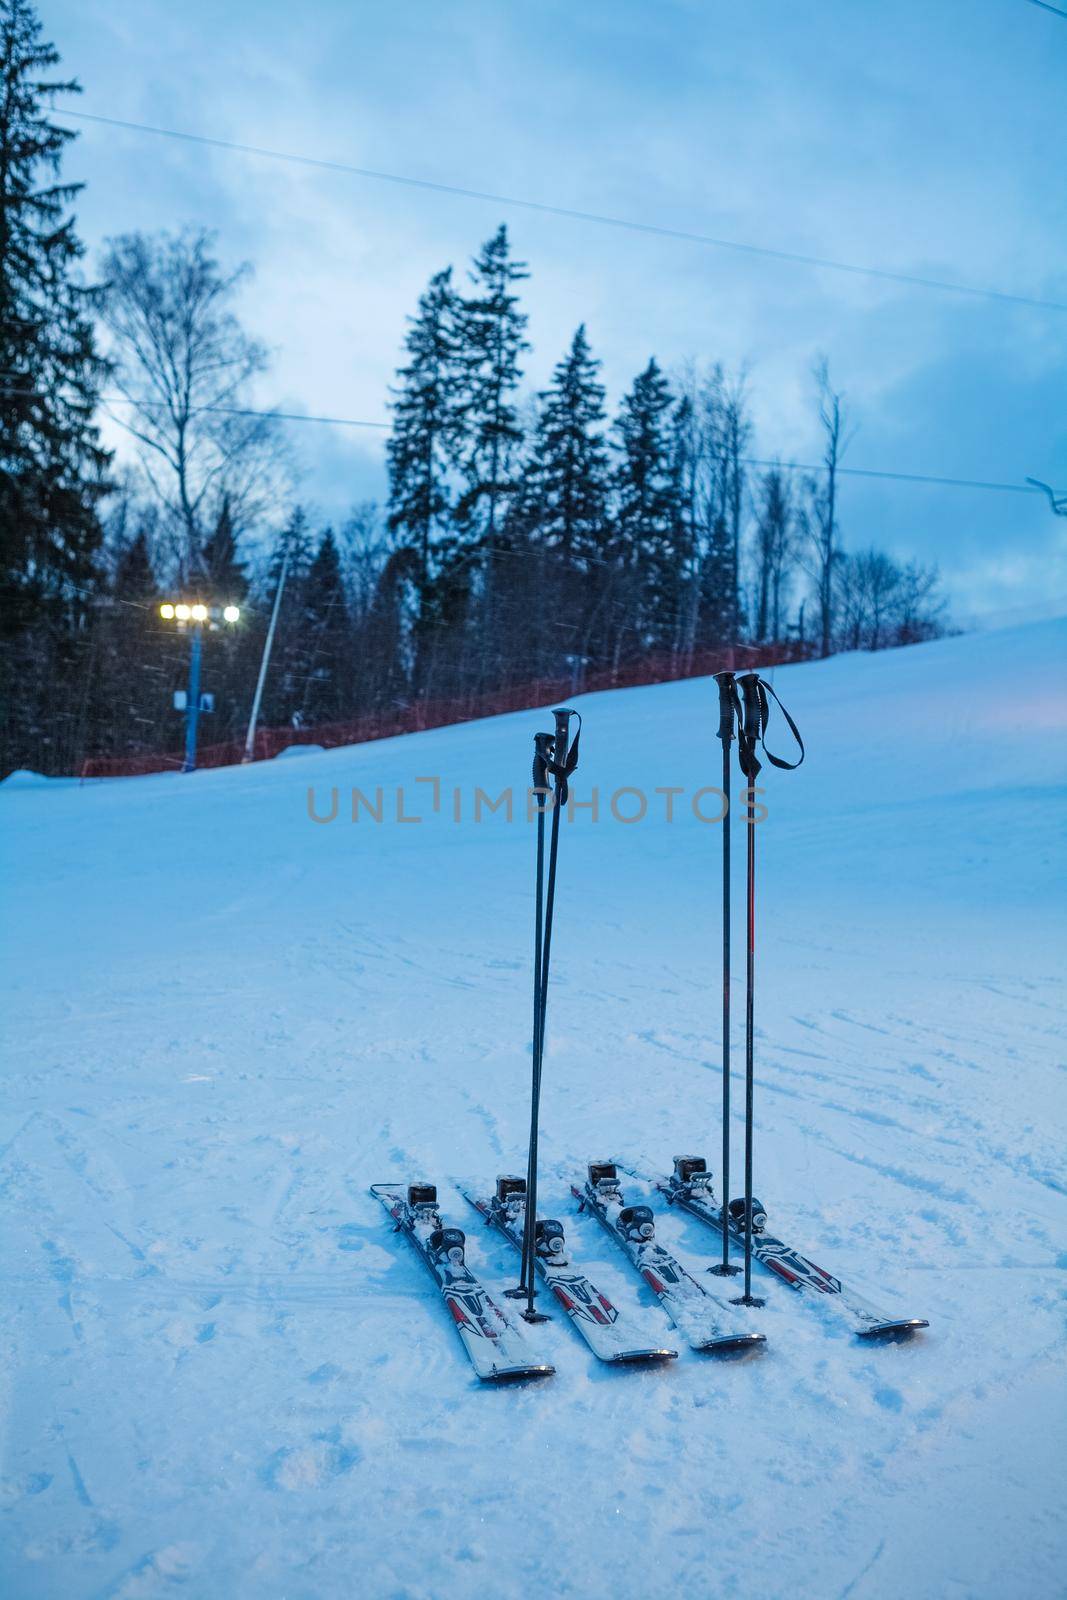 Skis on ski slope by dmitrysosenushkin